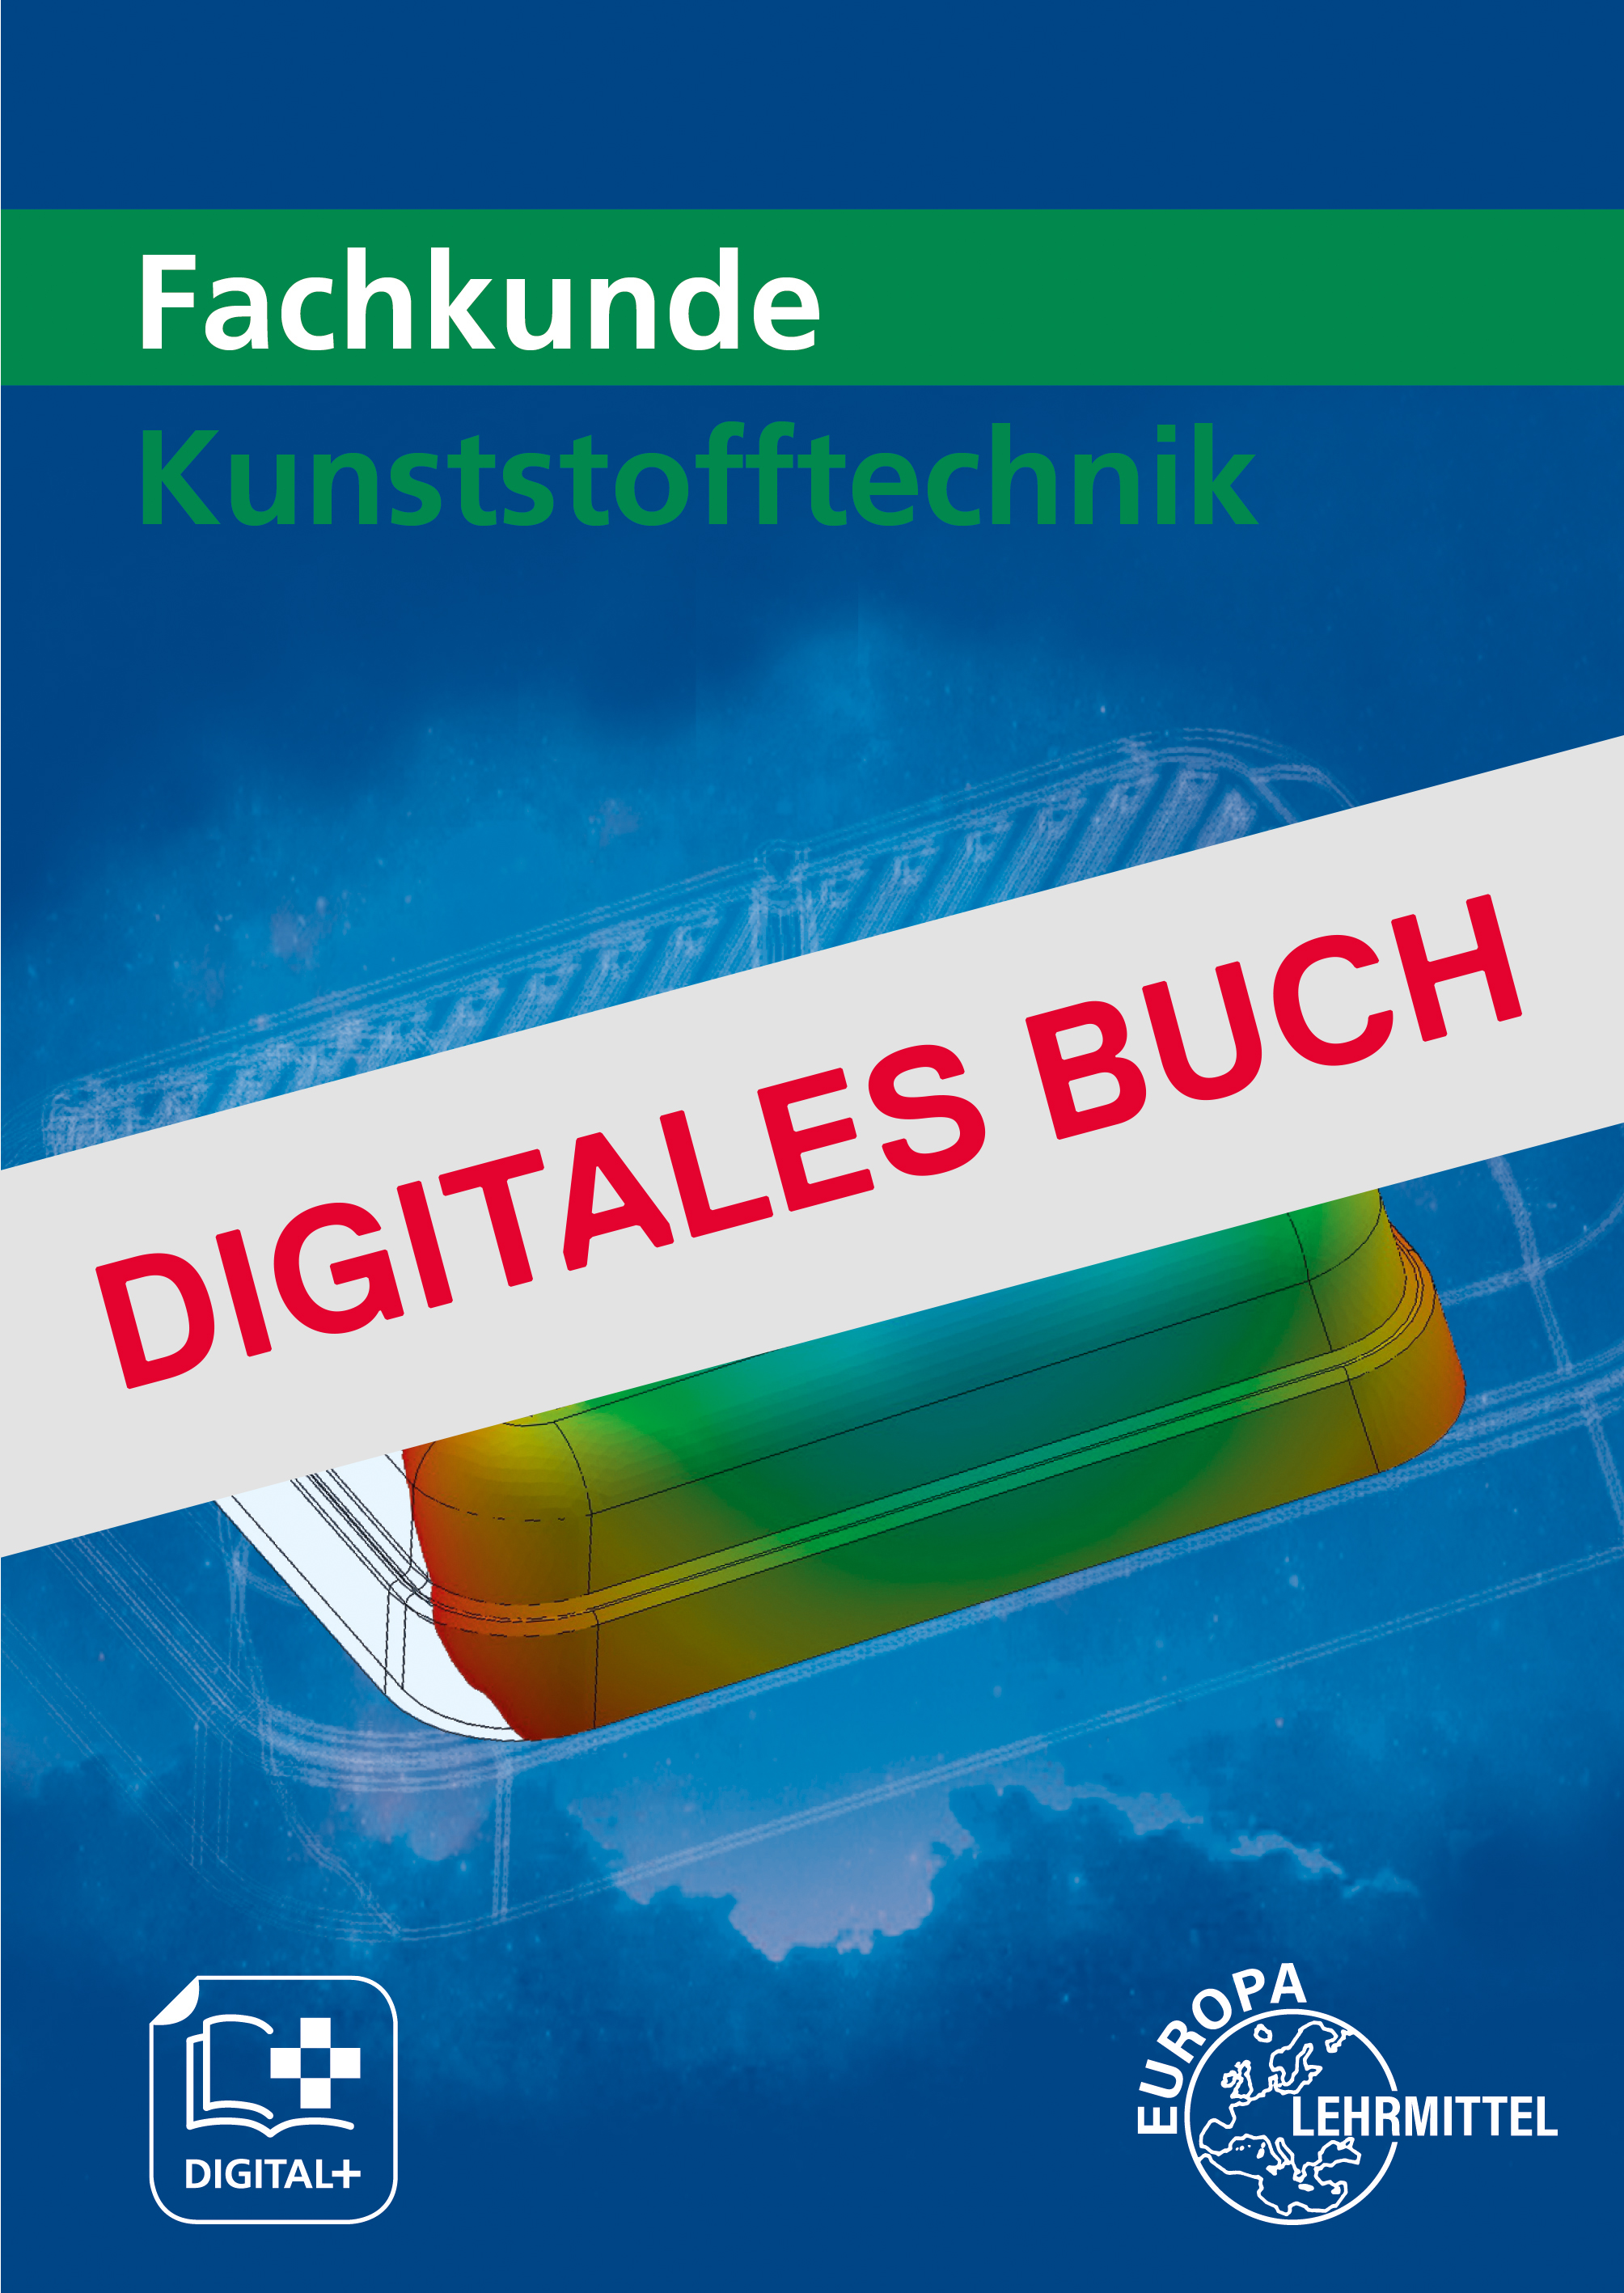 Fachkunde Kunststofftechnik Digitales Buch 